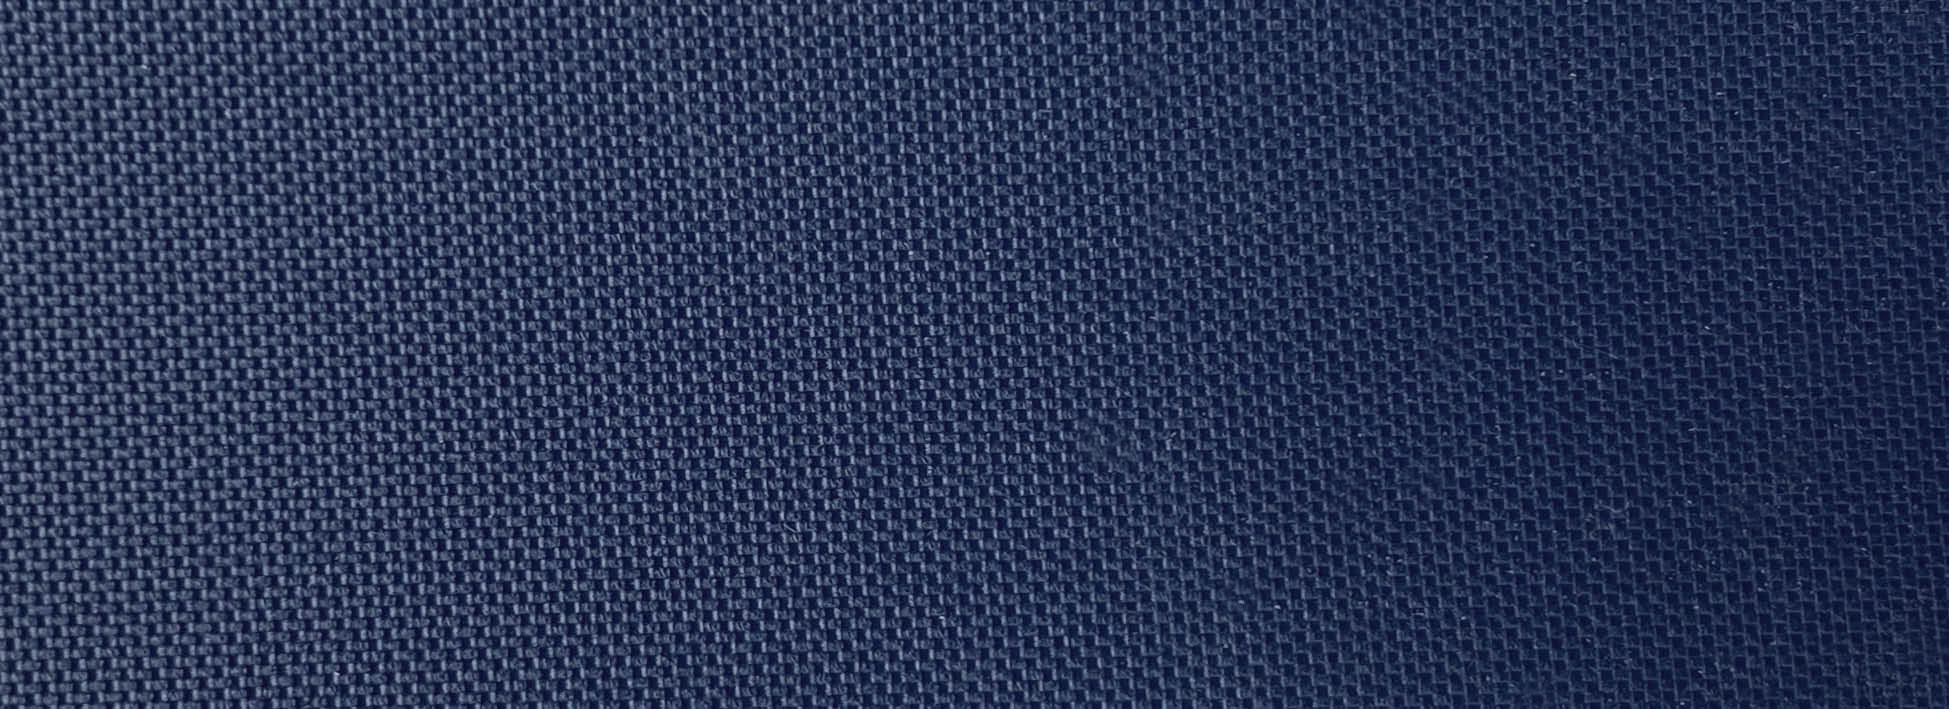 Ocean Blue Fabric Impression